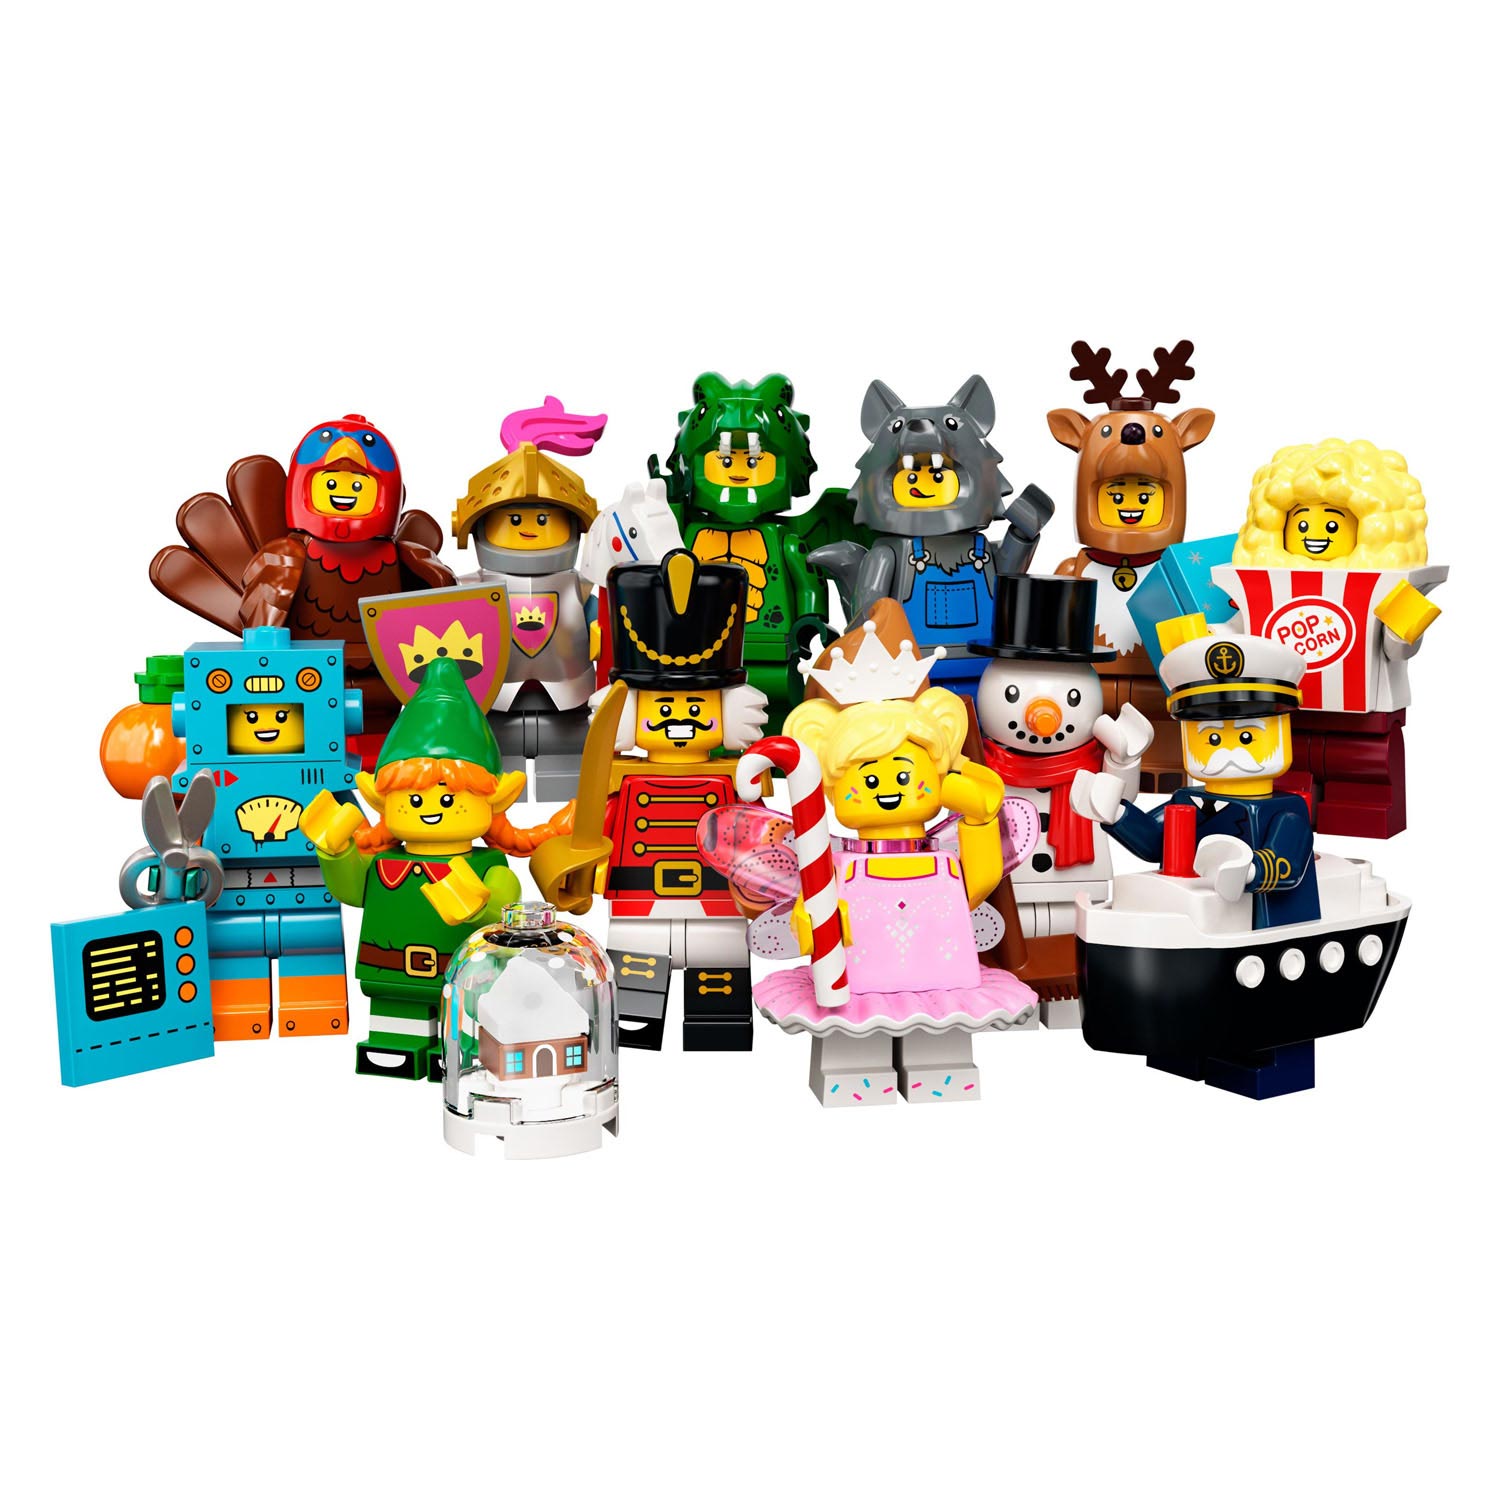 LEGO Minifiguren 71034 Serie 23 Limited Edition Poppetje